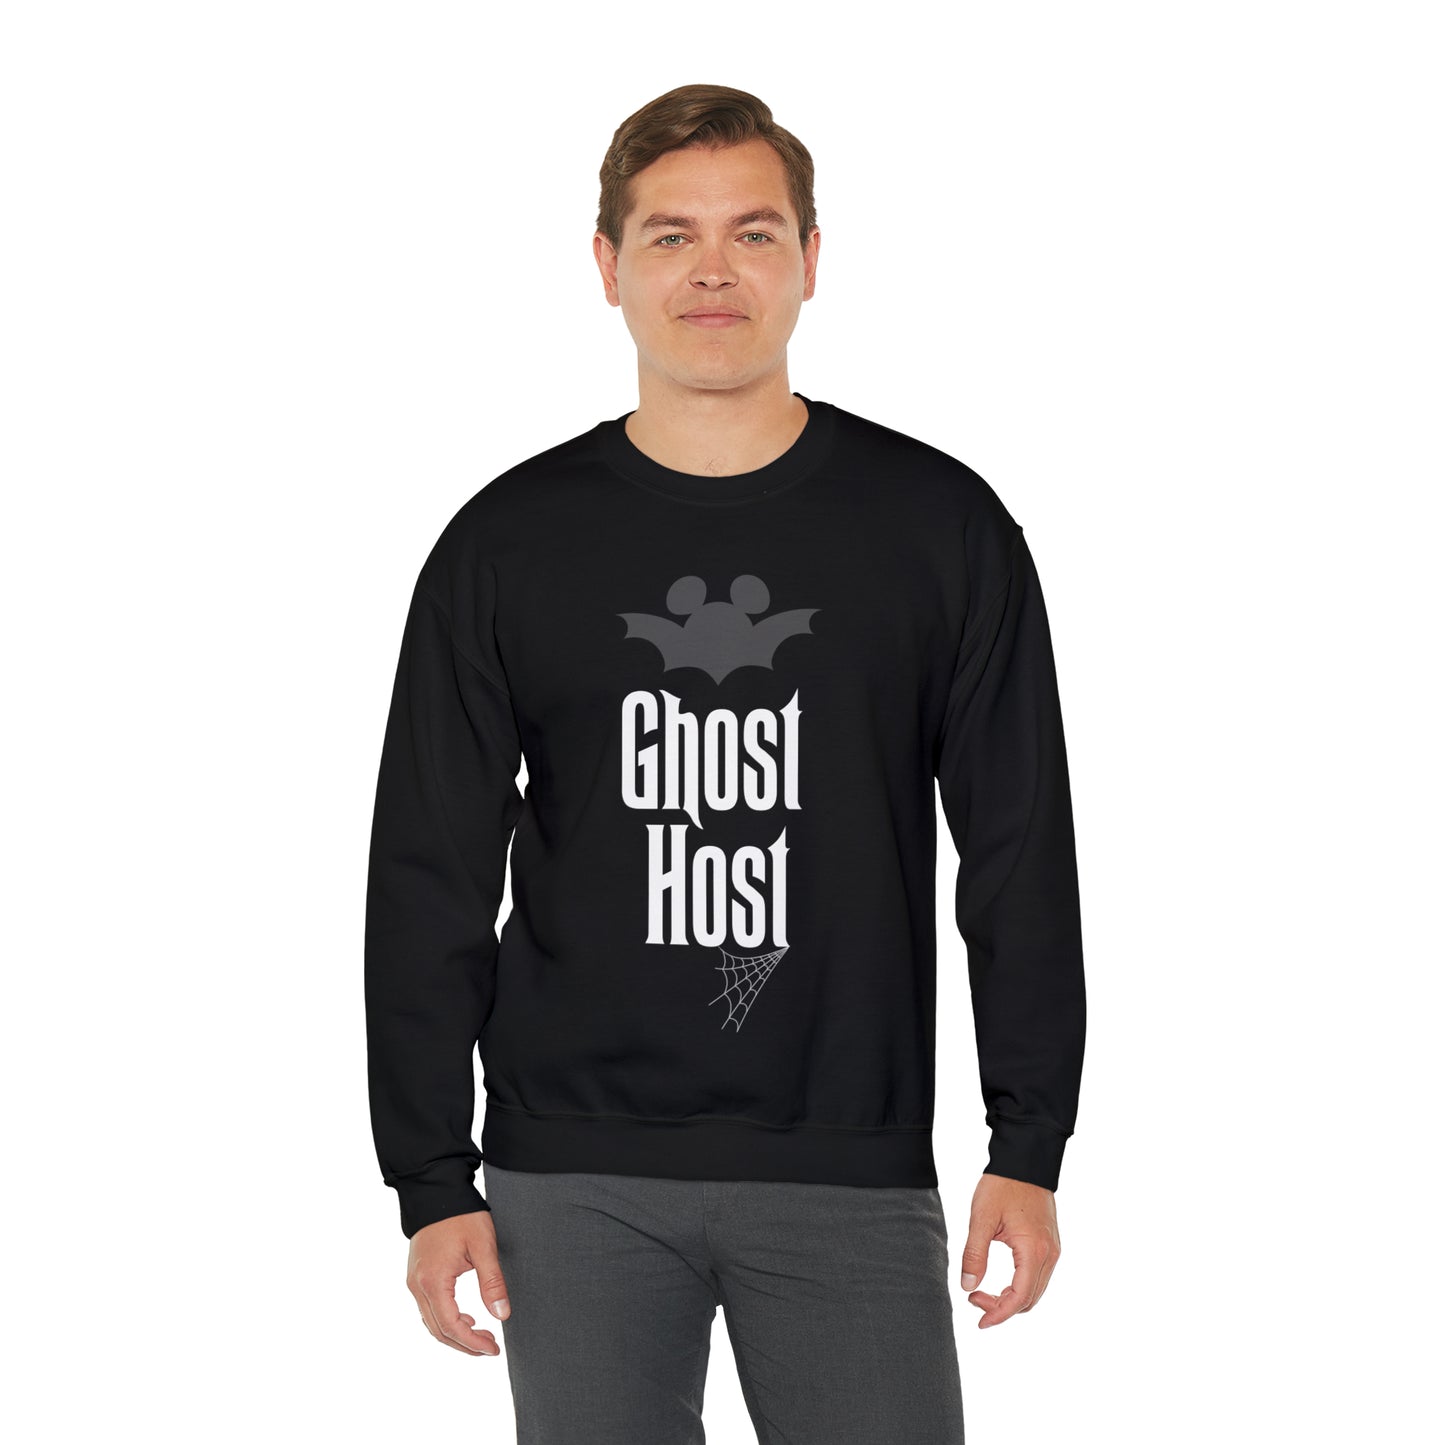 Ghost Host - Crewneck Sweatshirt